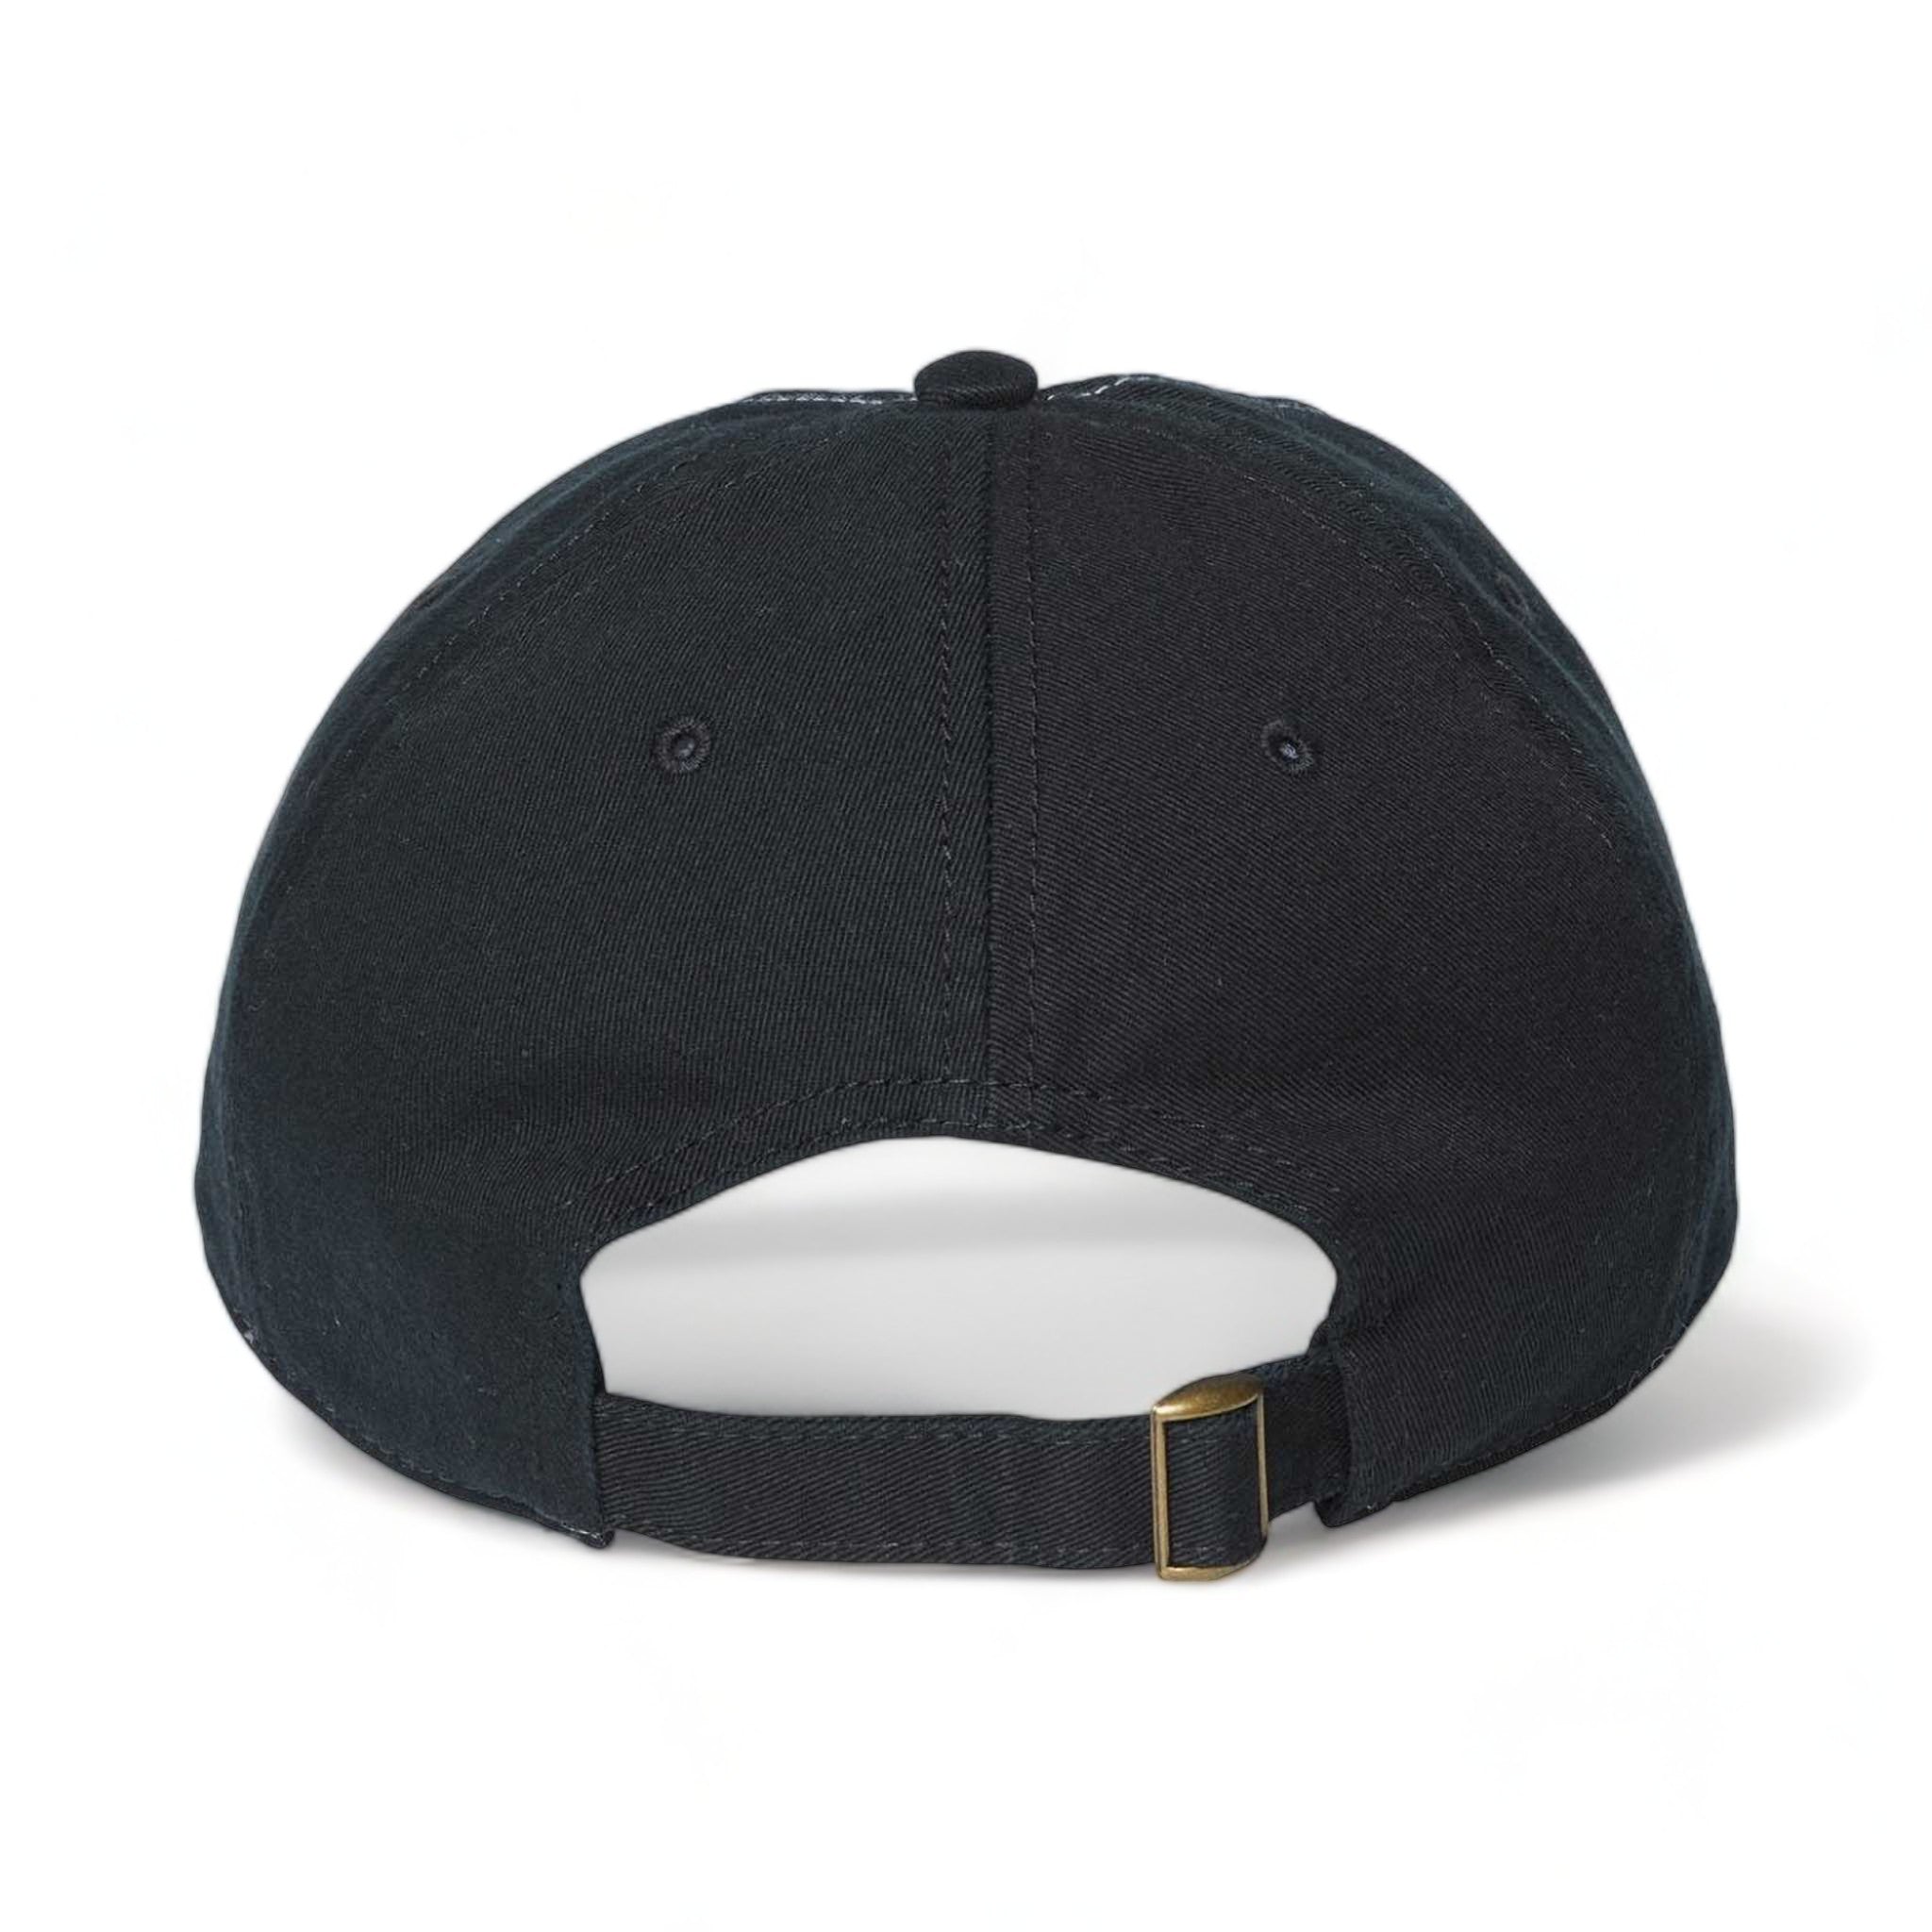 Back view of CAP AMERICA i1002 custom hat in white and black